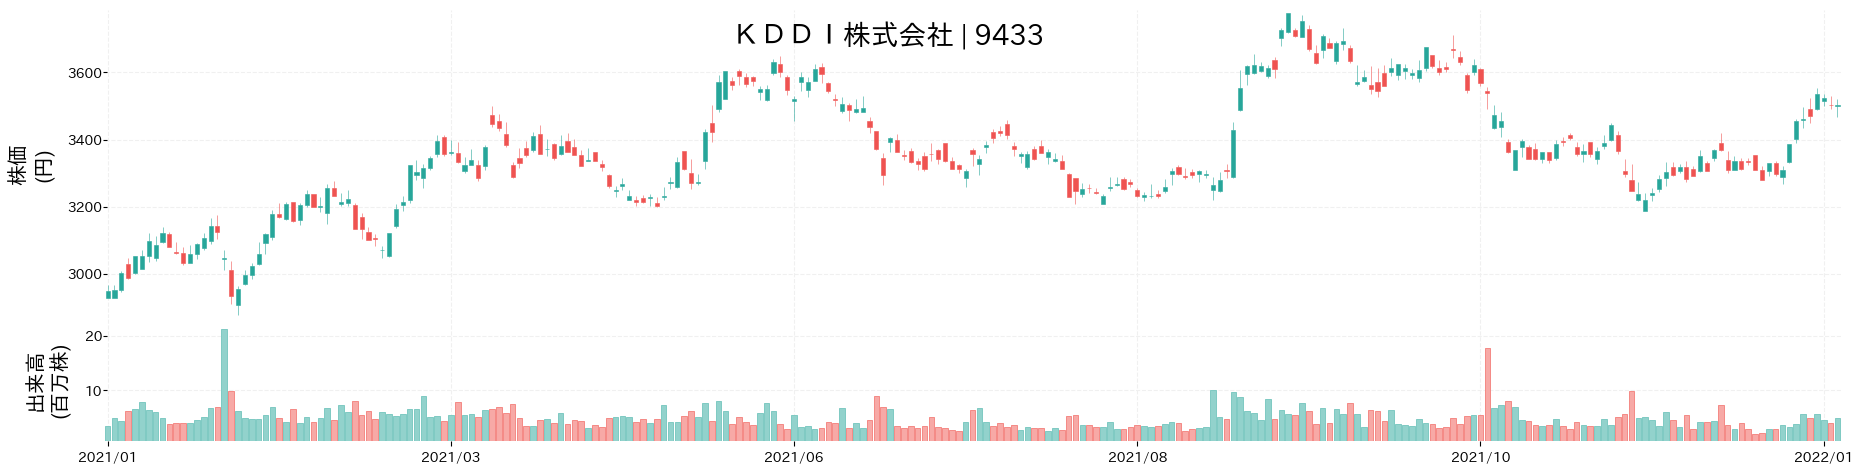 KDDIの株価推移(2021)